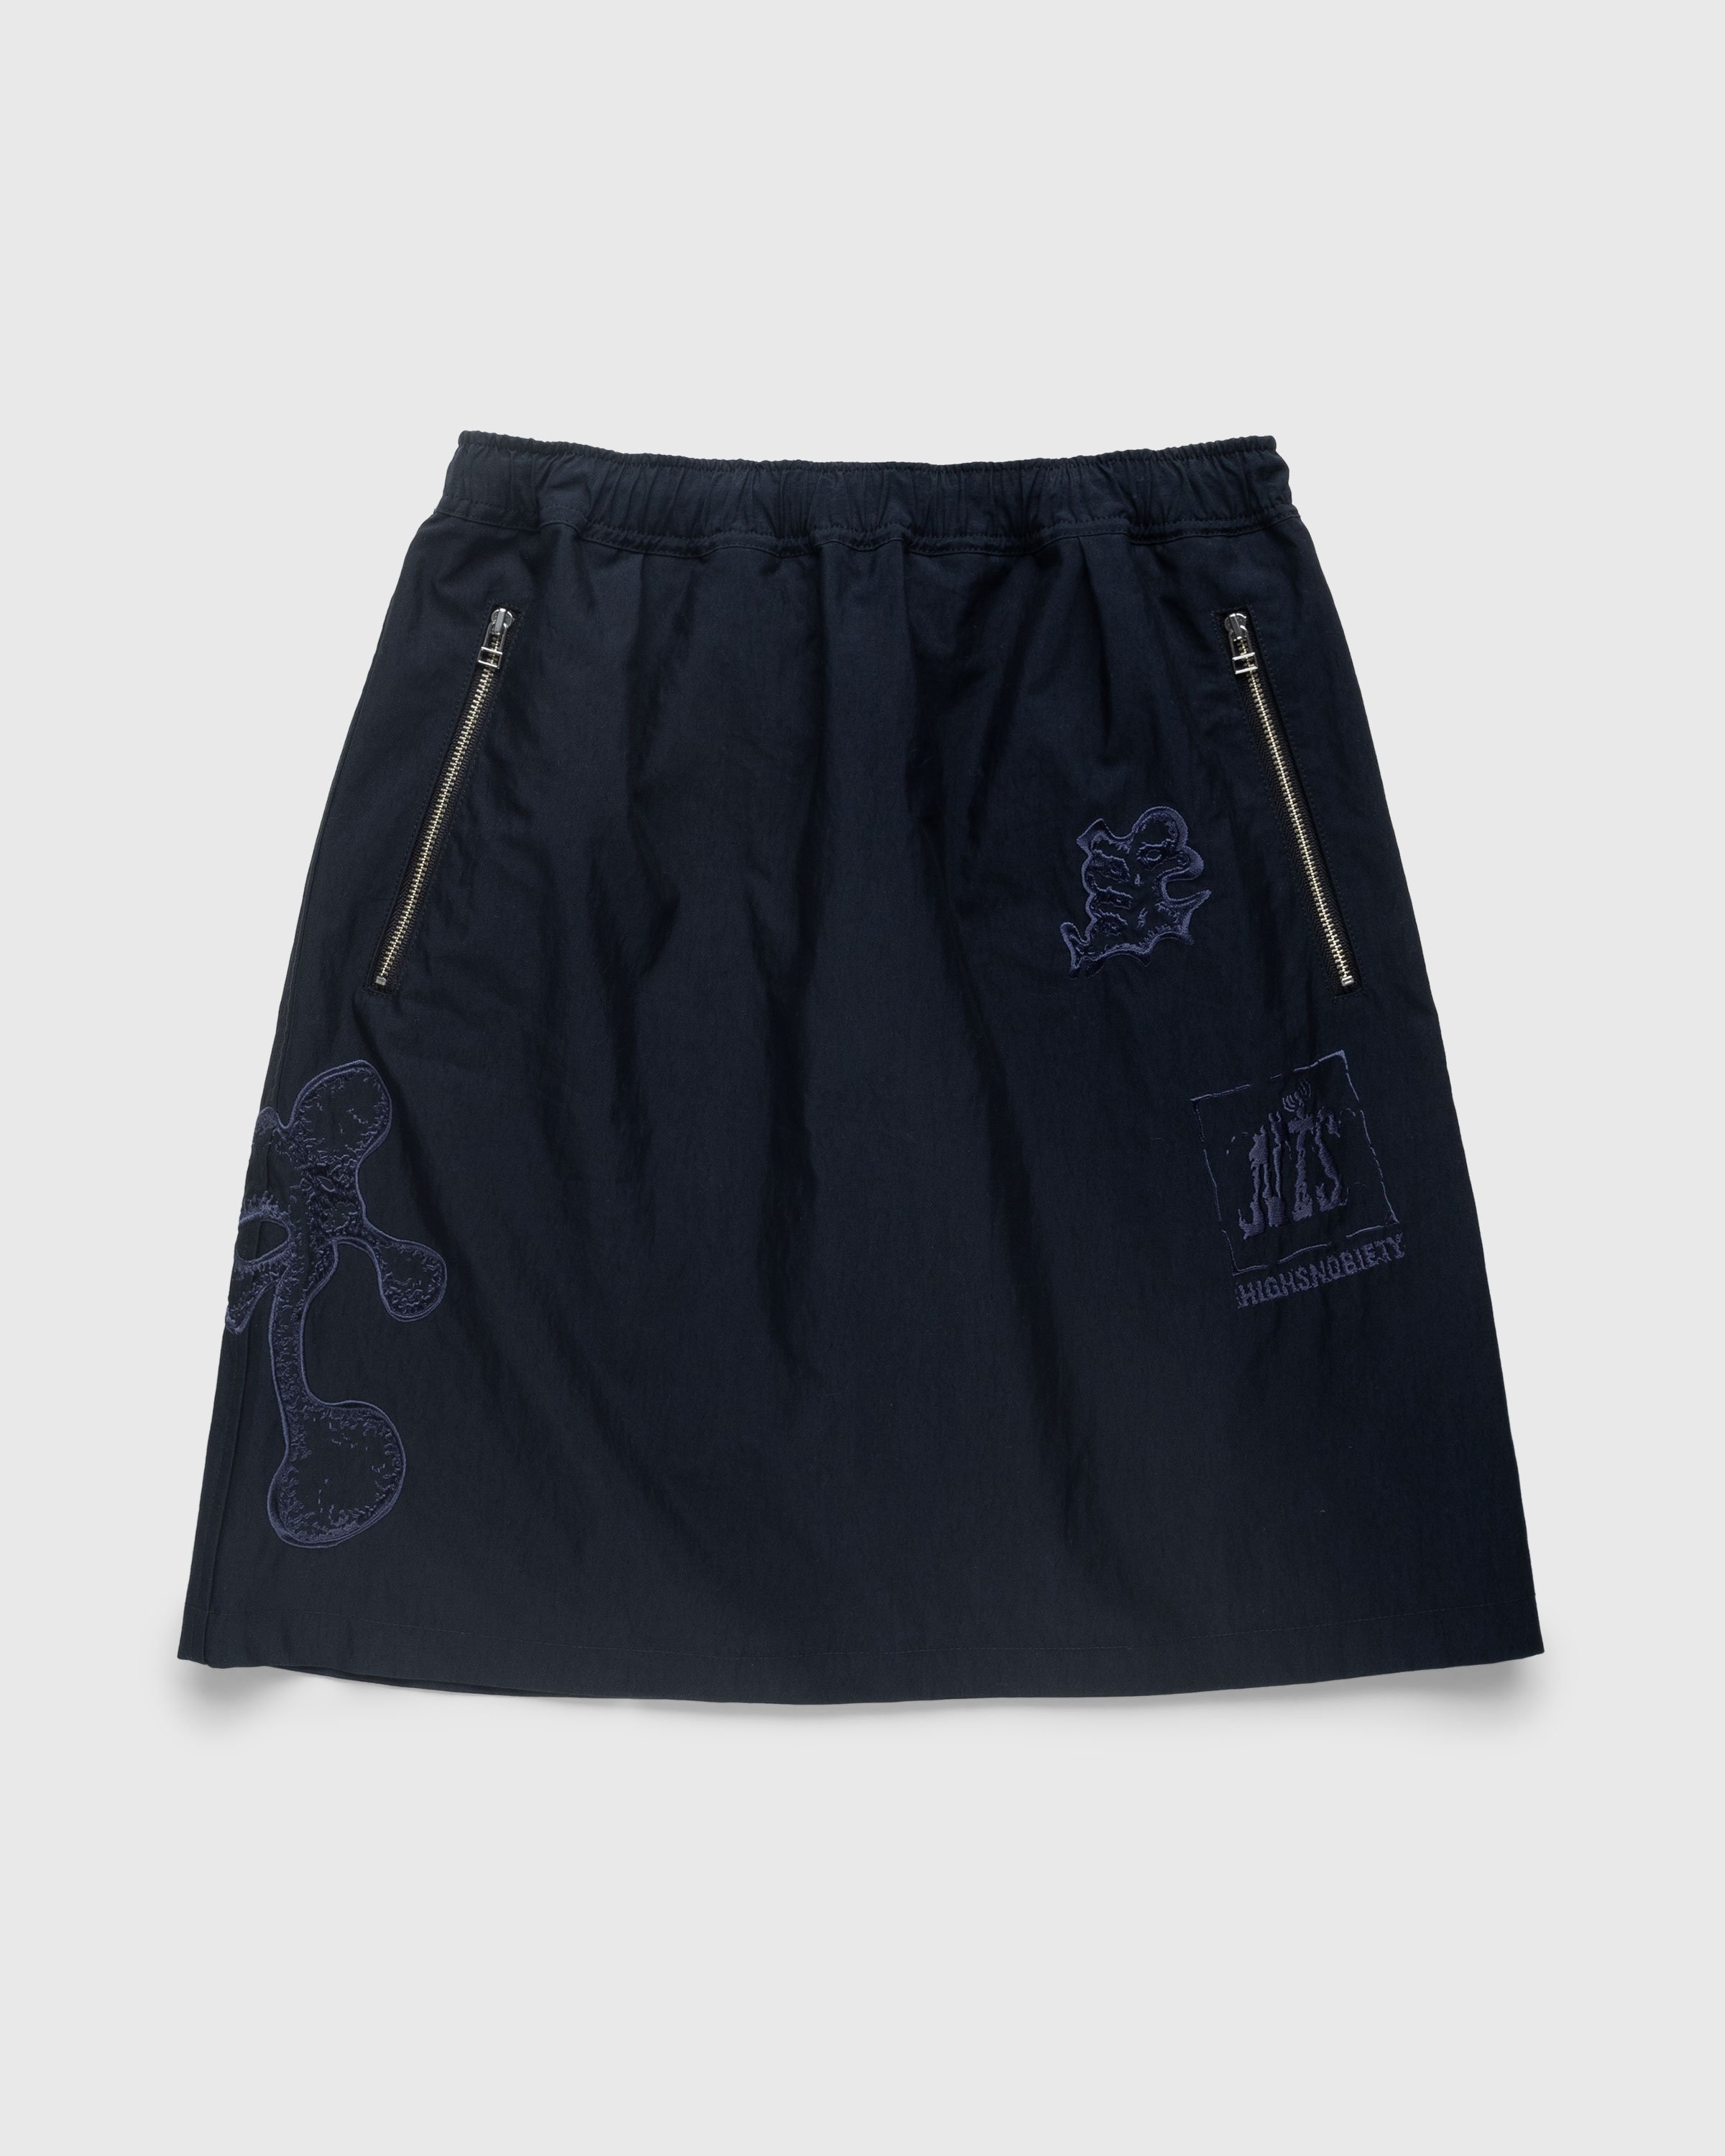 NTS x Highsnobiety - Brushed Nylon Skirt Navy - Clothing - Black - Image 1